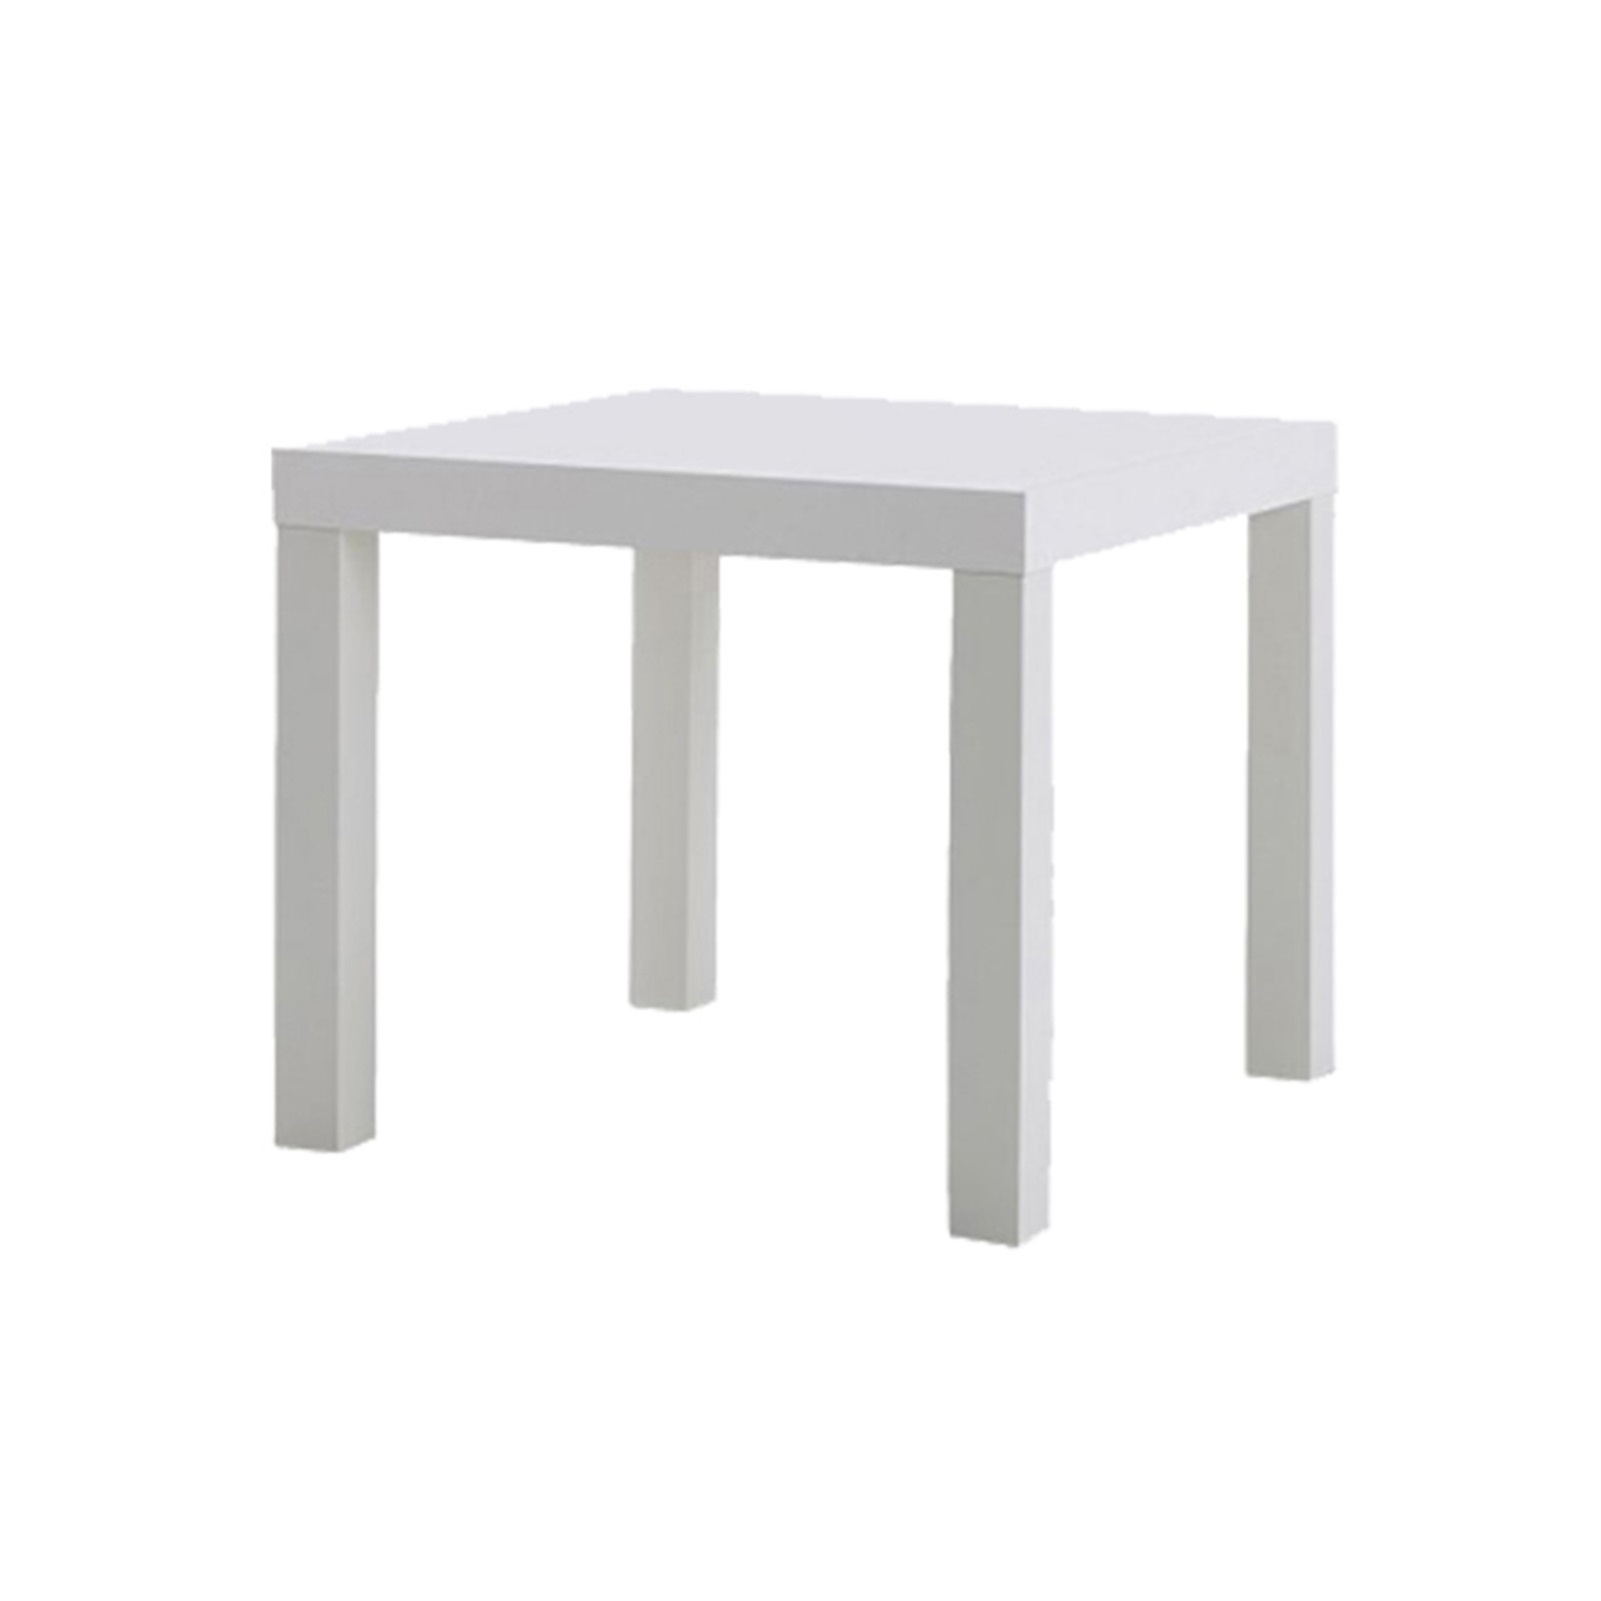 белый столик икеа в интерьере